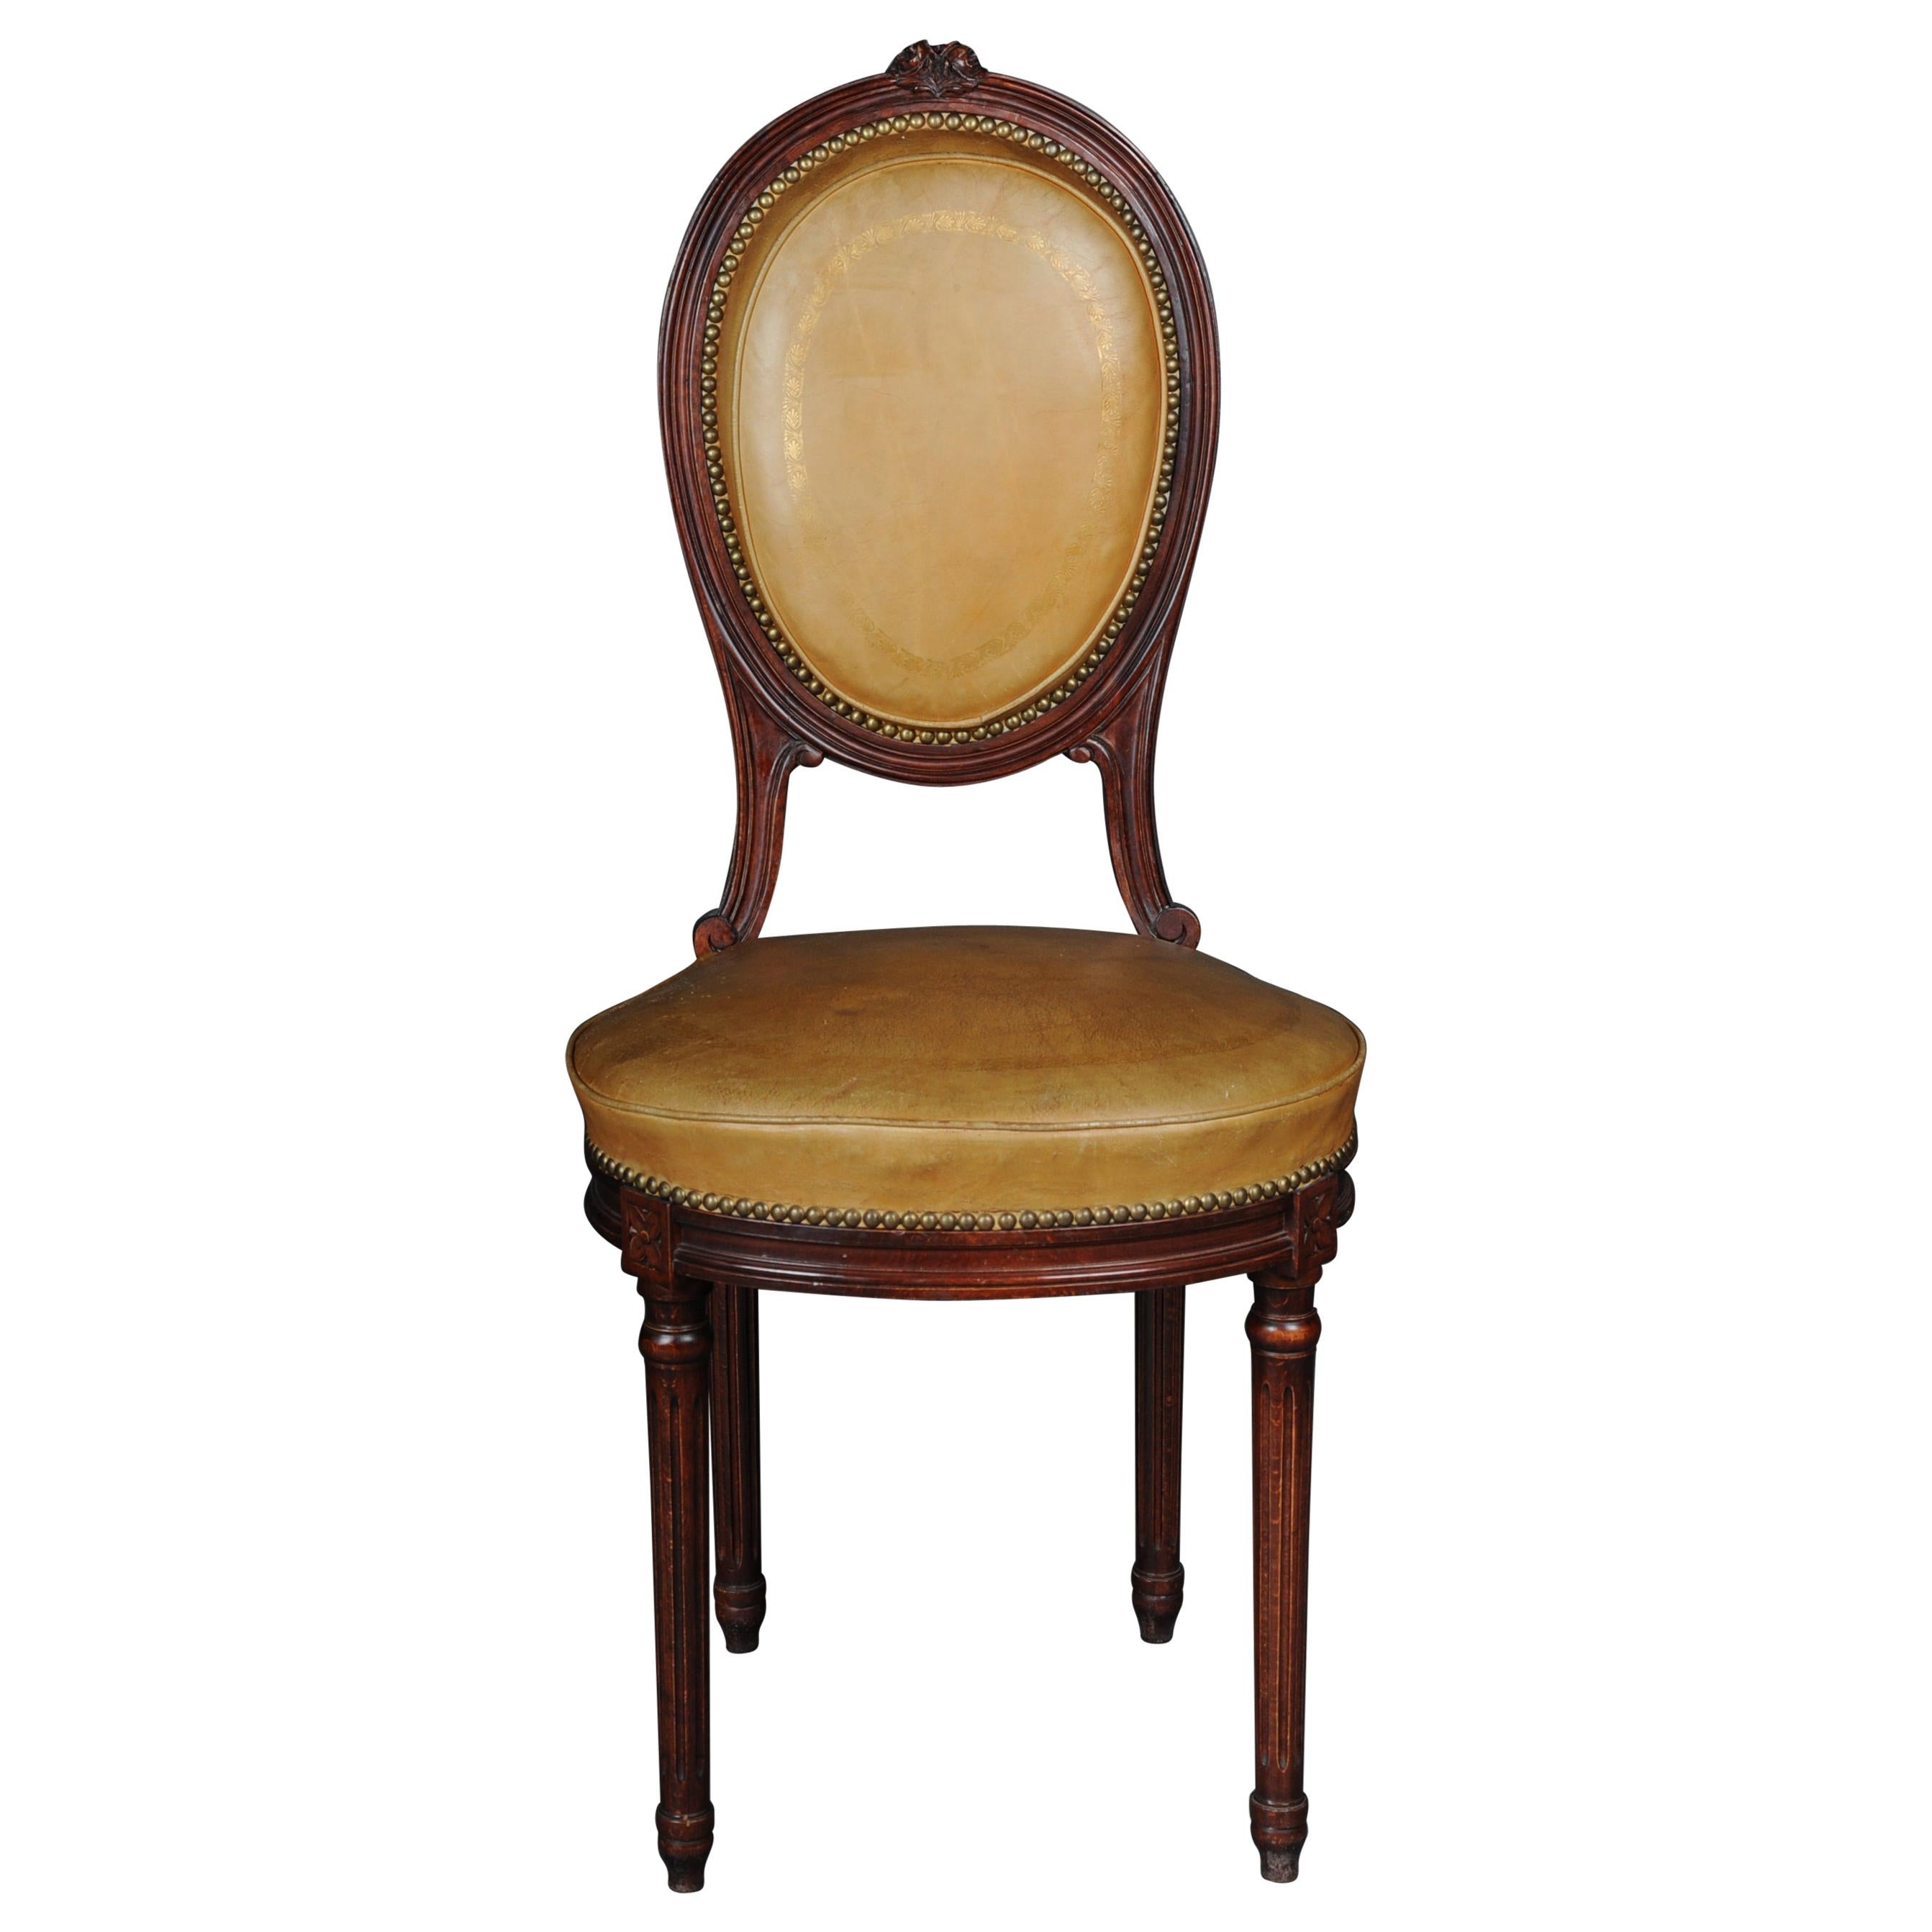 Beautiful Louis XVI Salon Chair, France, around 1920